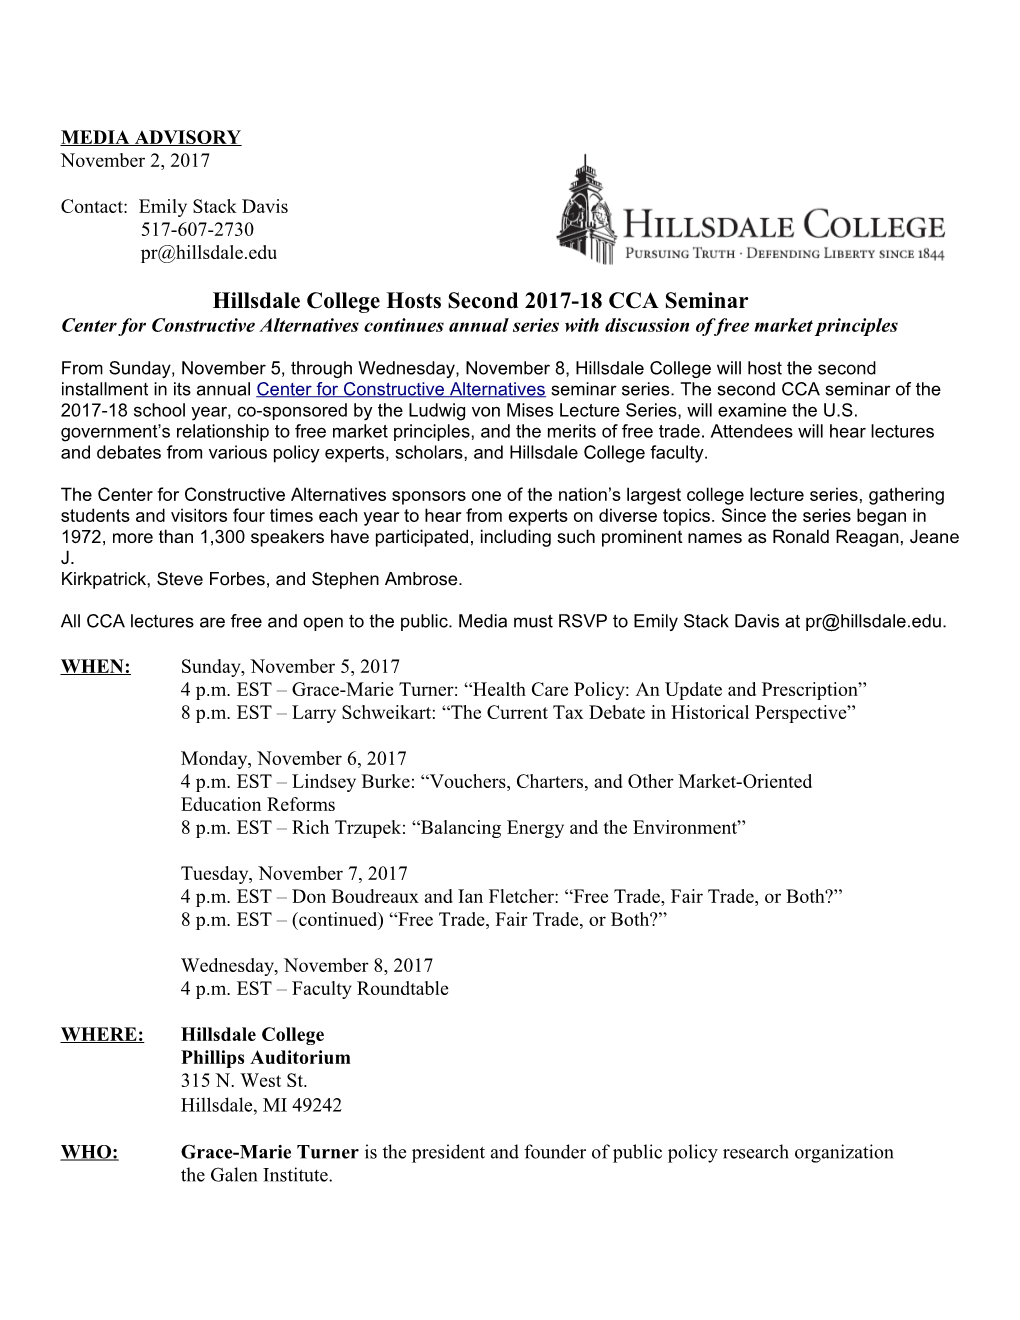 Hillsdale College Hosts Second 2017-18 CCA Seminar